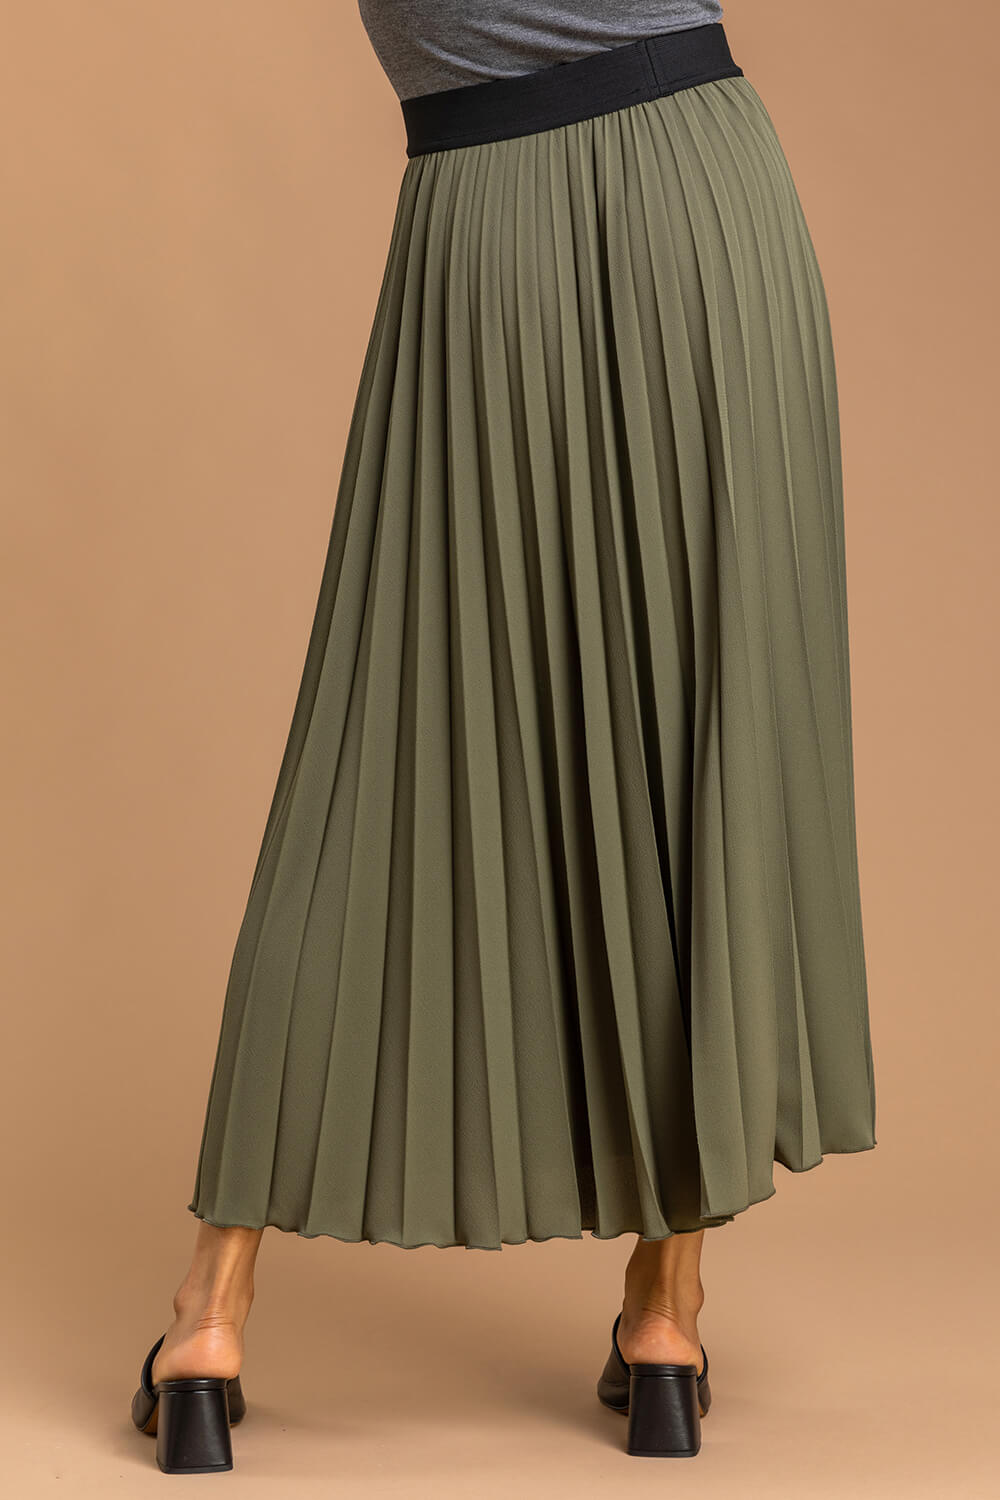 KHAKI Pleated Maxi Skirt, Image 2 of 4